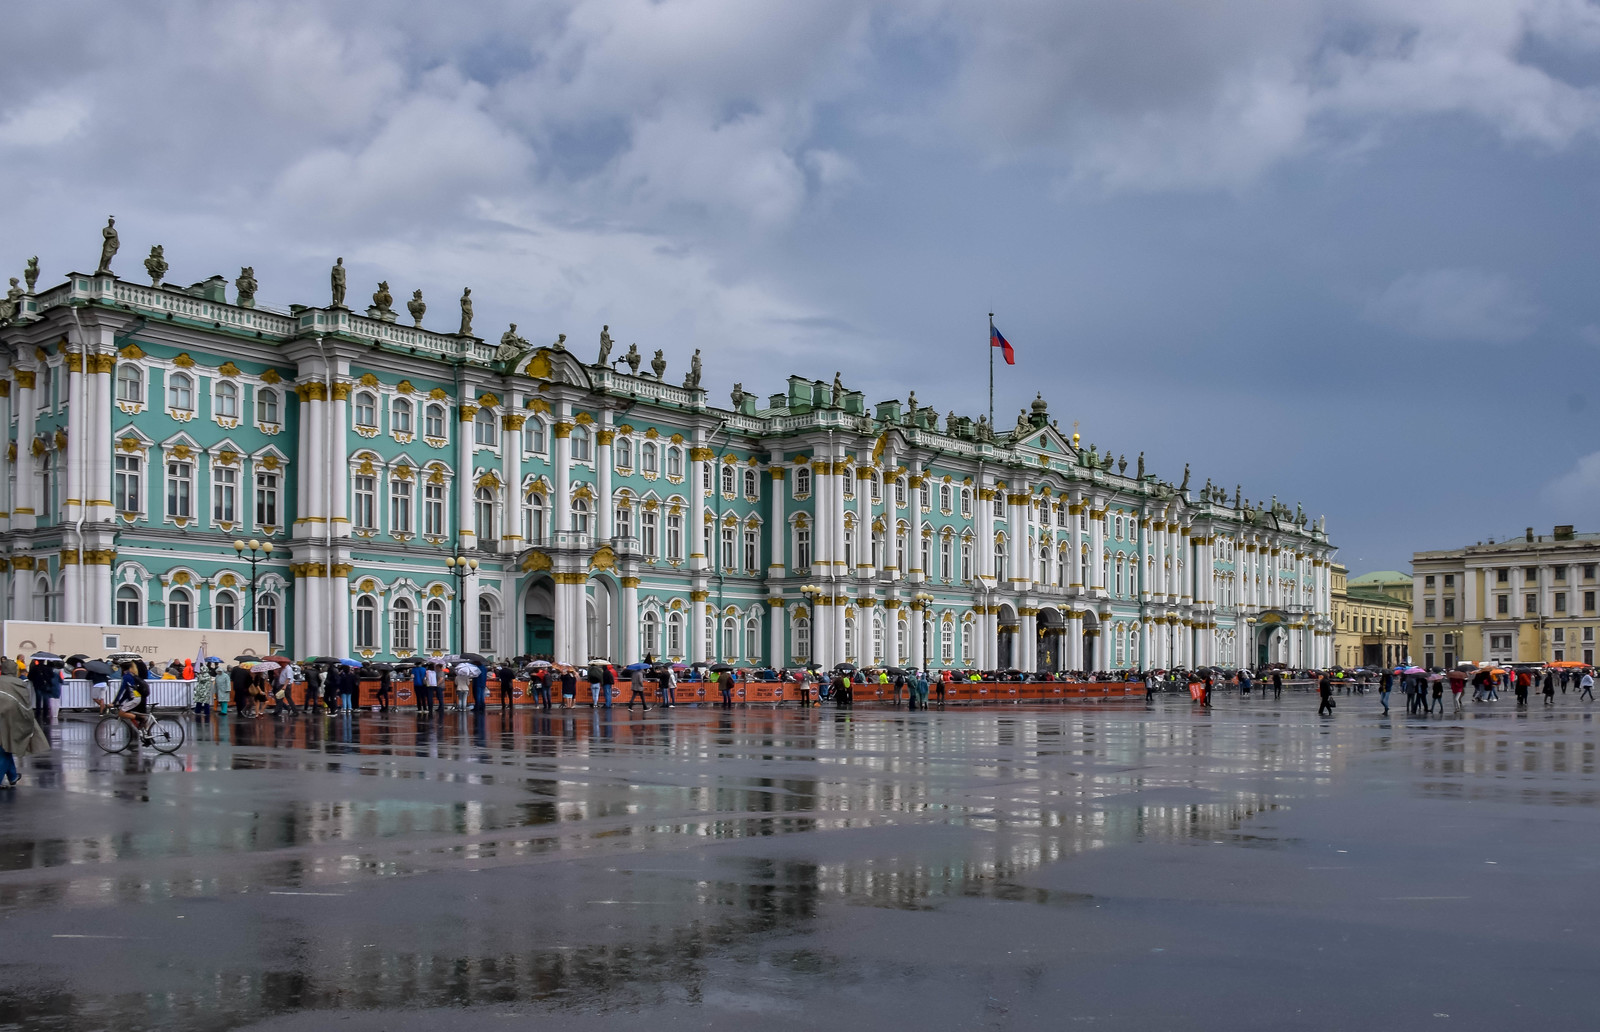 The Hermitage Museum exterior in St. Petersburg, Russia